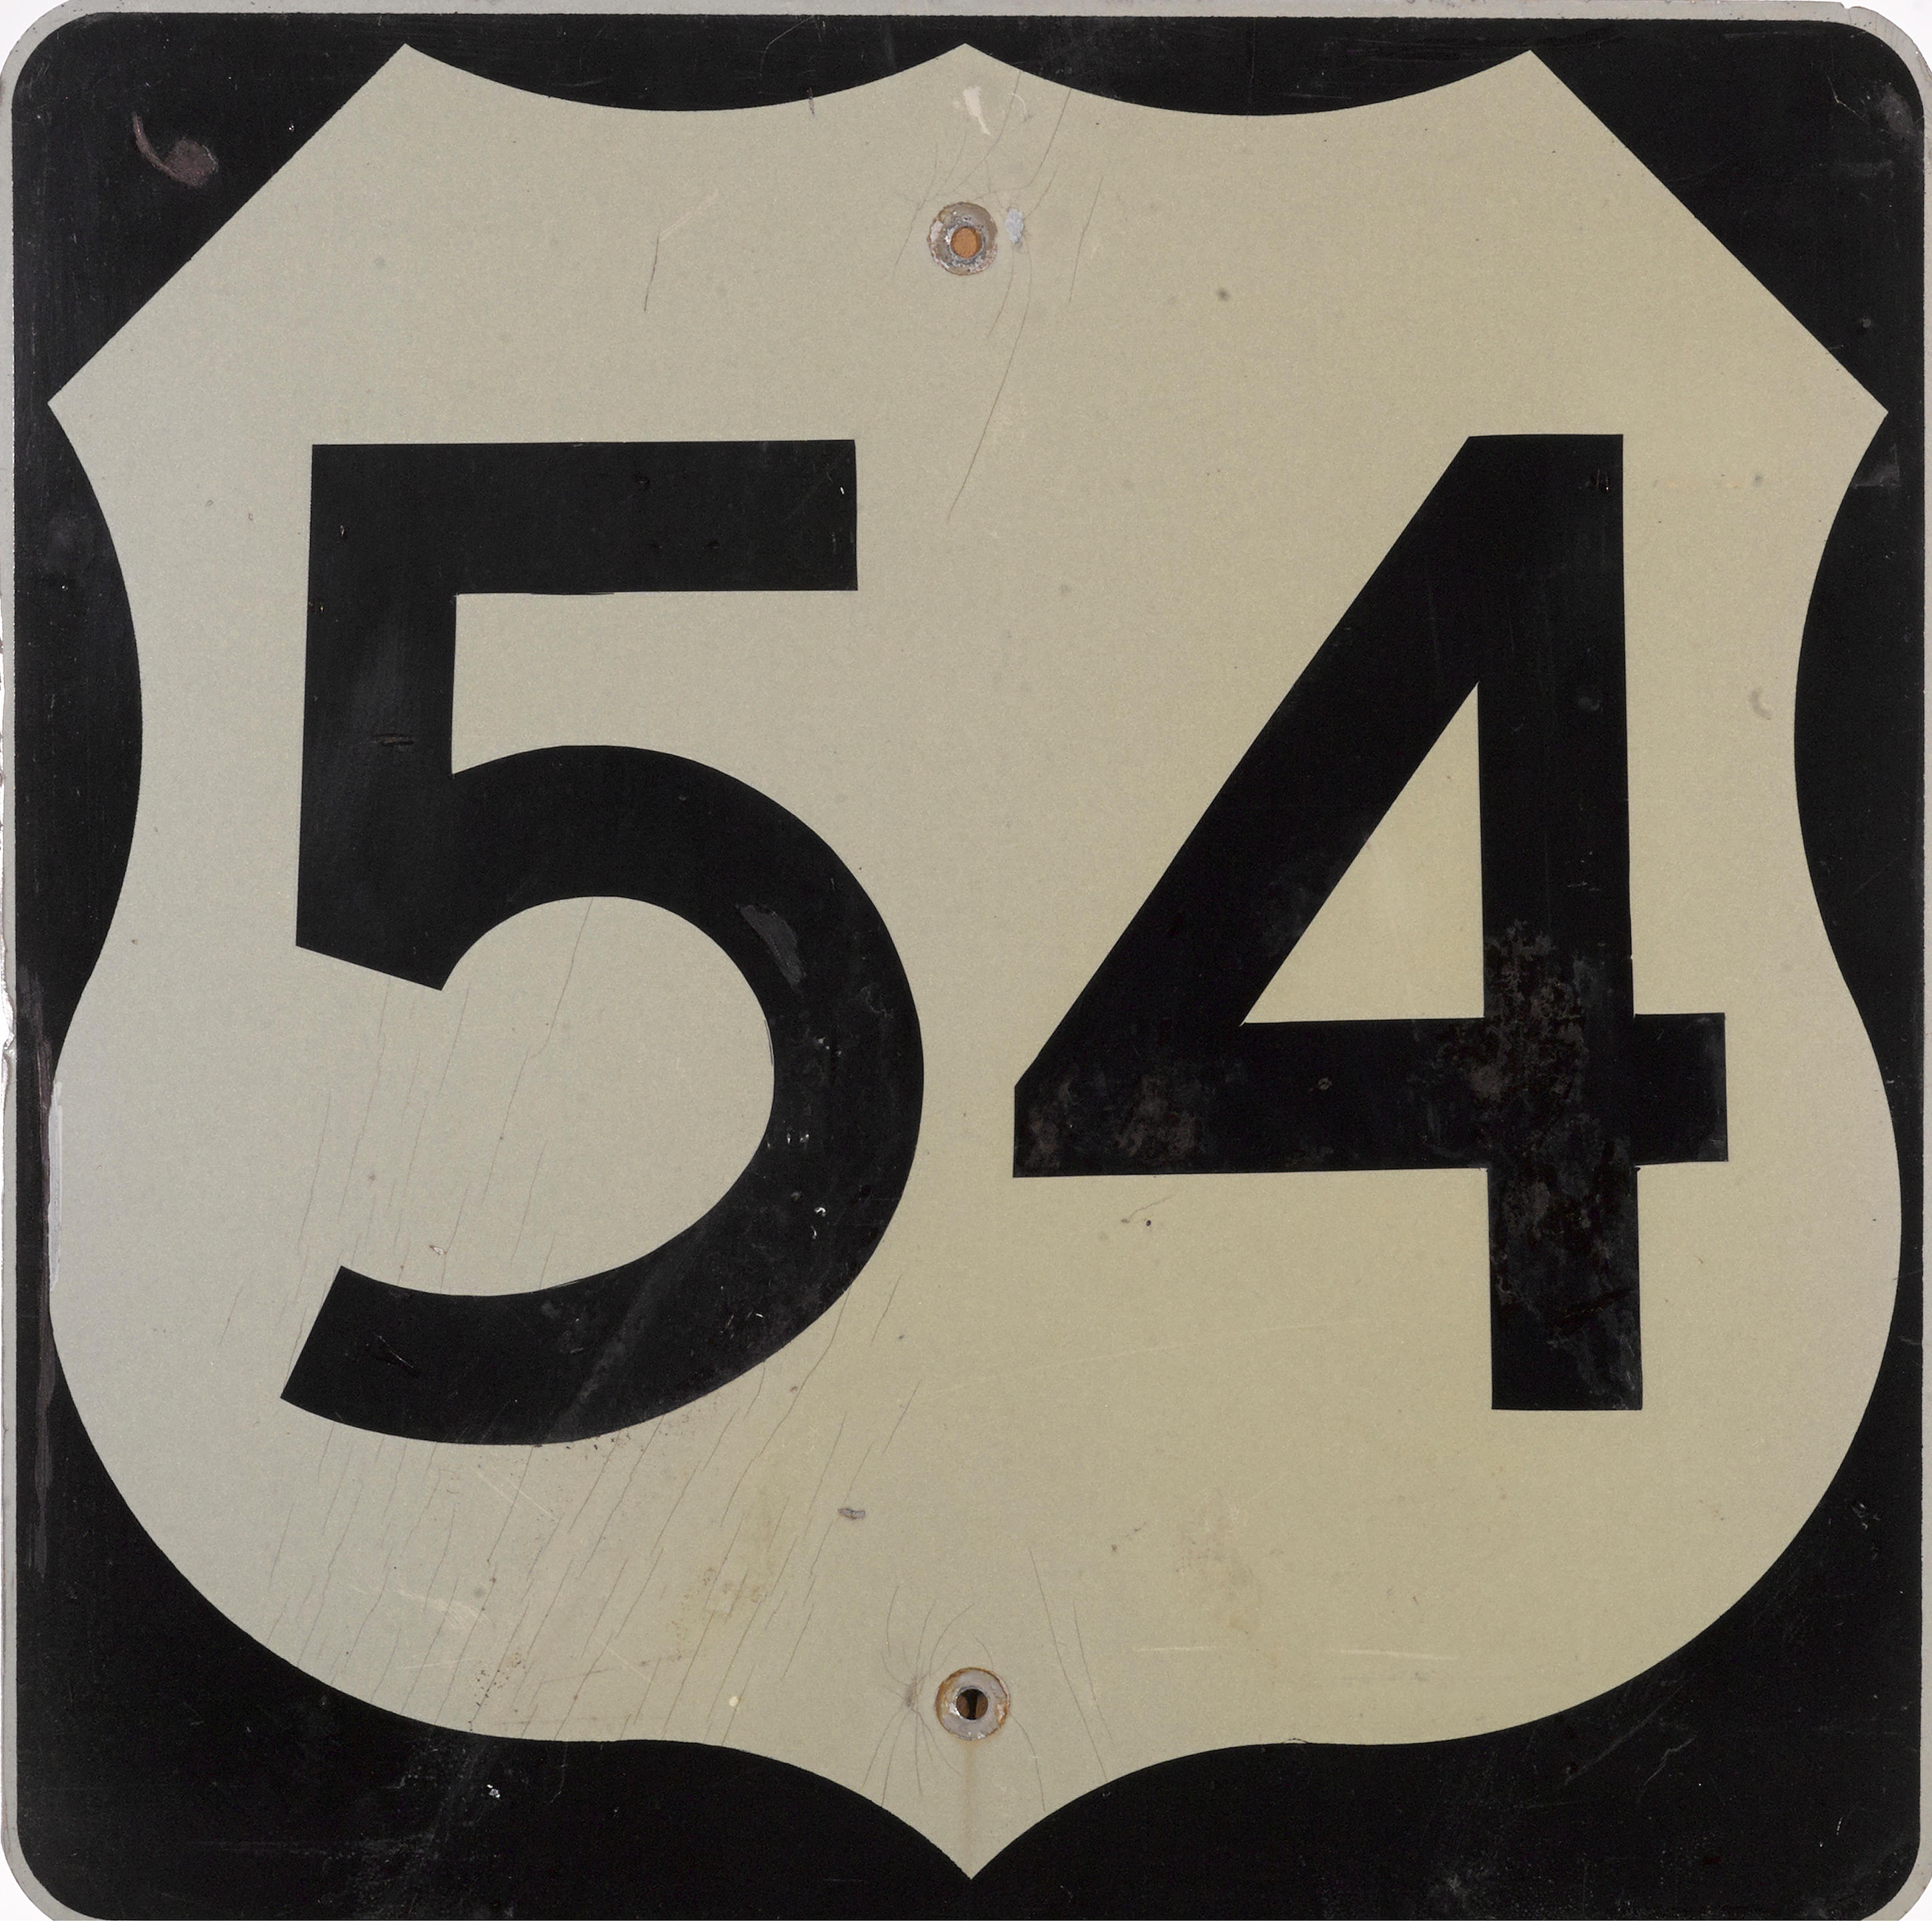 A vintage US Virginia Highway 54 sign,